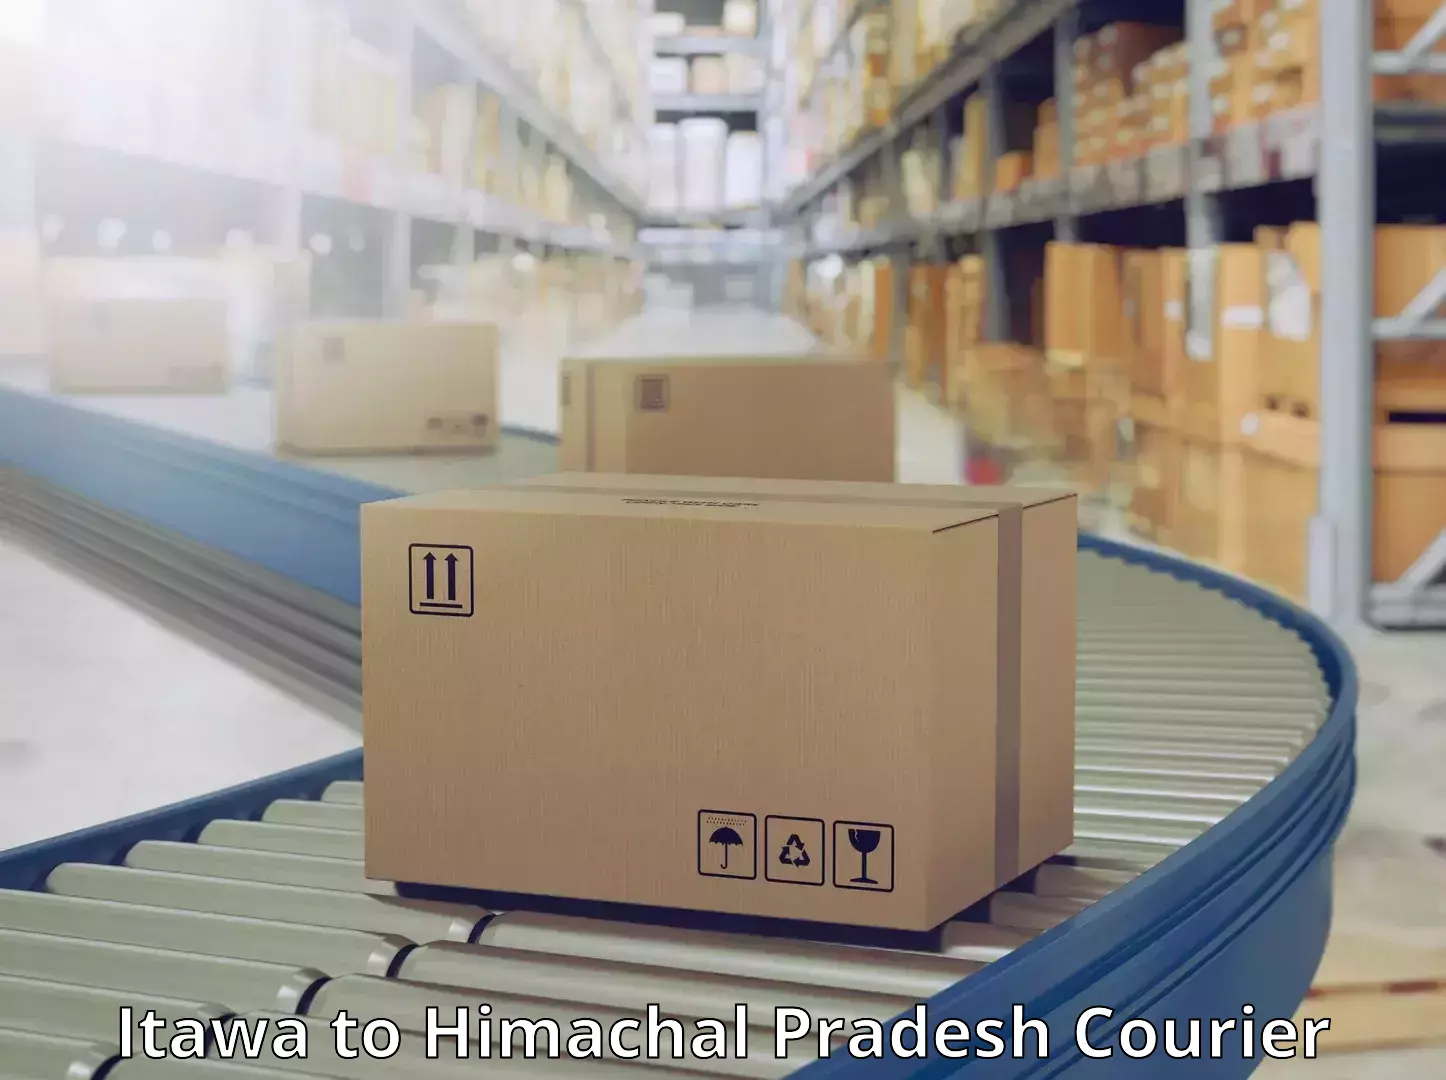 Modern delivery technologies Itawa to Himachal Pradesh